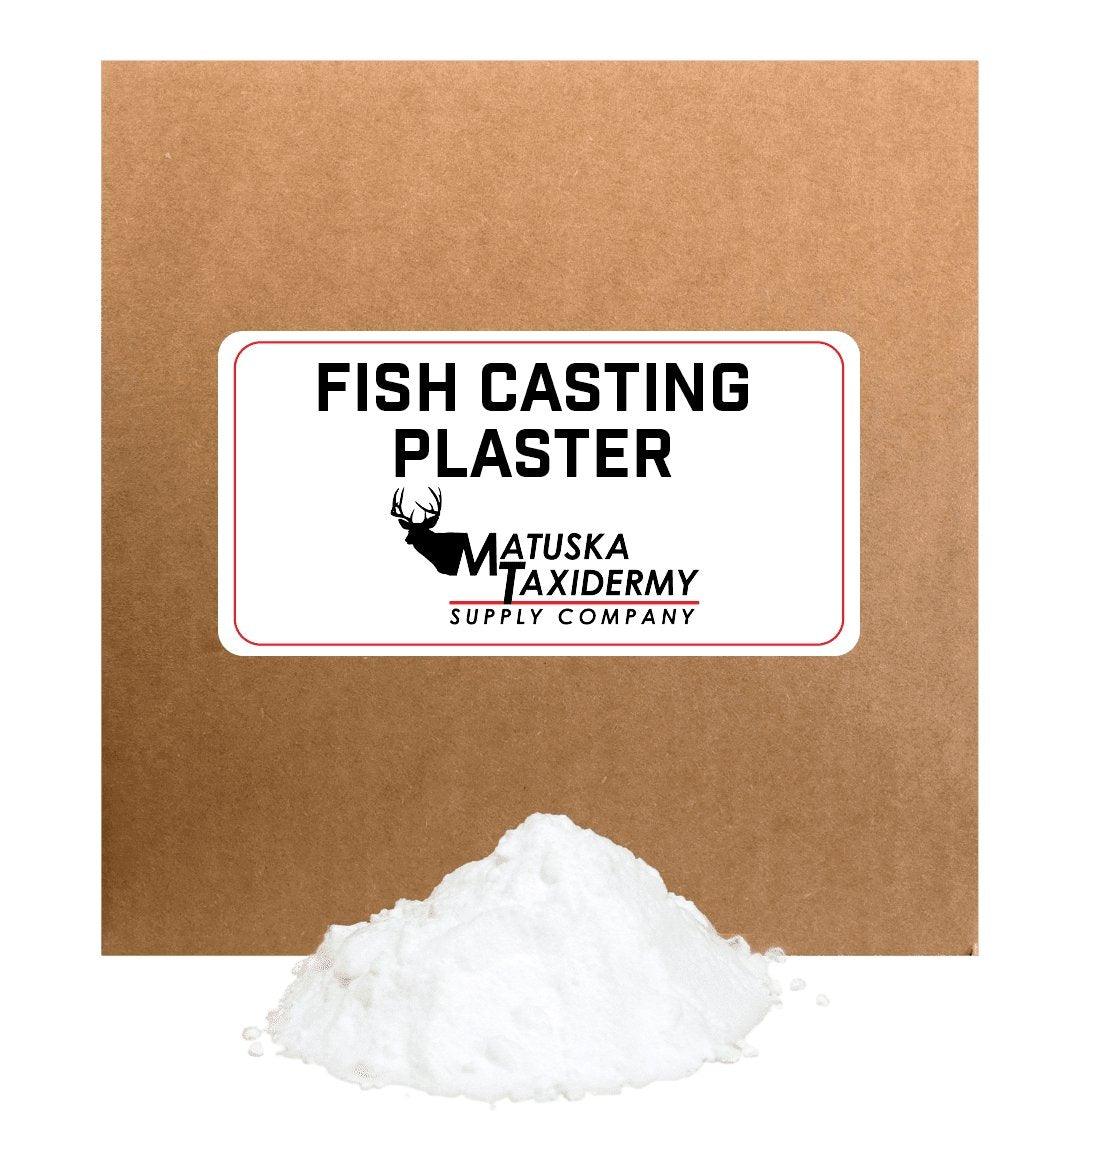 Plaster (Fish Casting) by Zehner - Matuska Taxidermy Supply Company